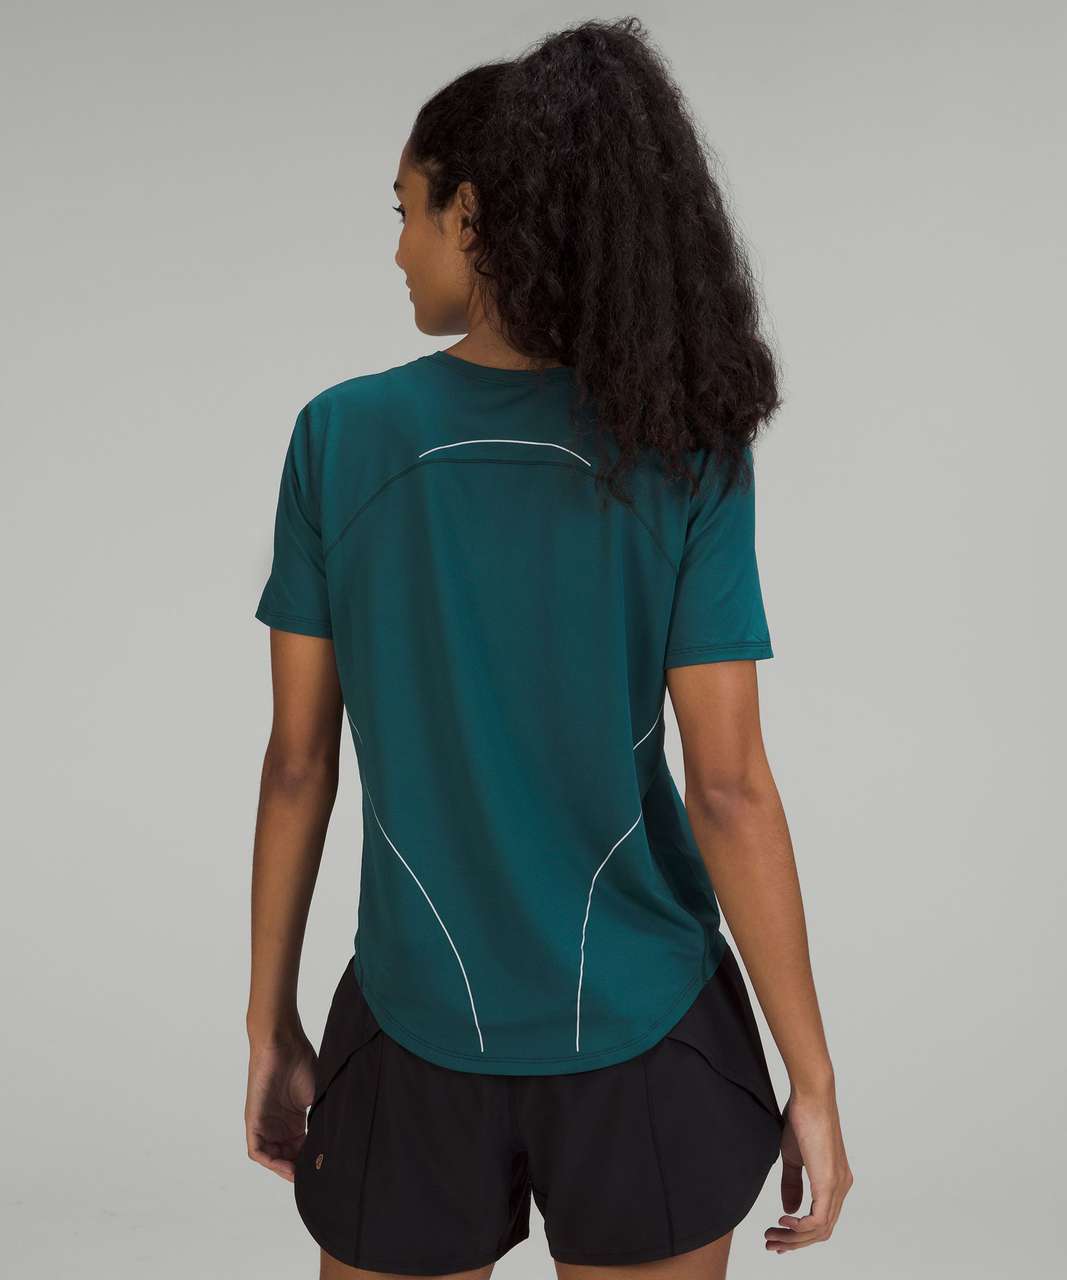 Lululemon High-Neck Running and Training Reflective T-Shirt - Green Jasper